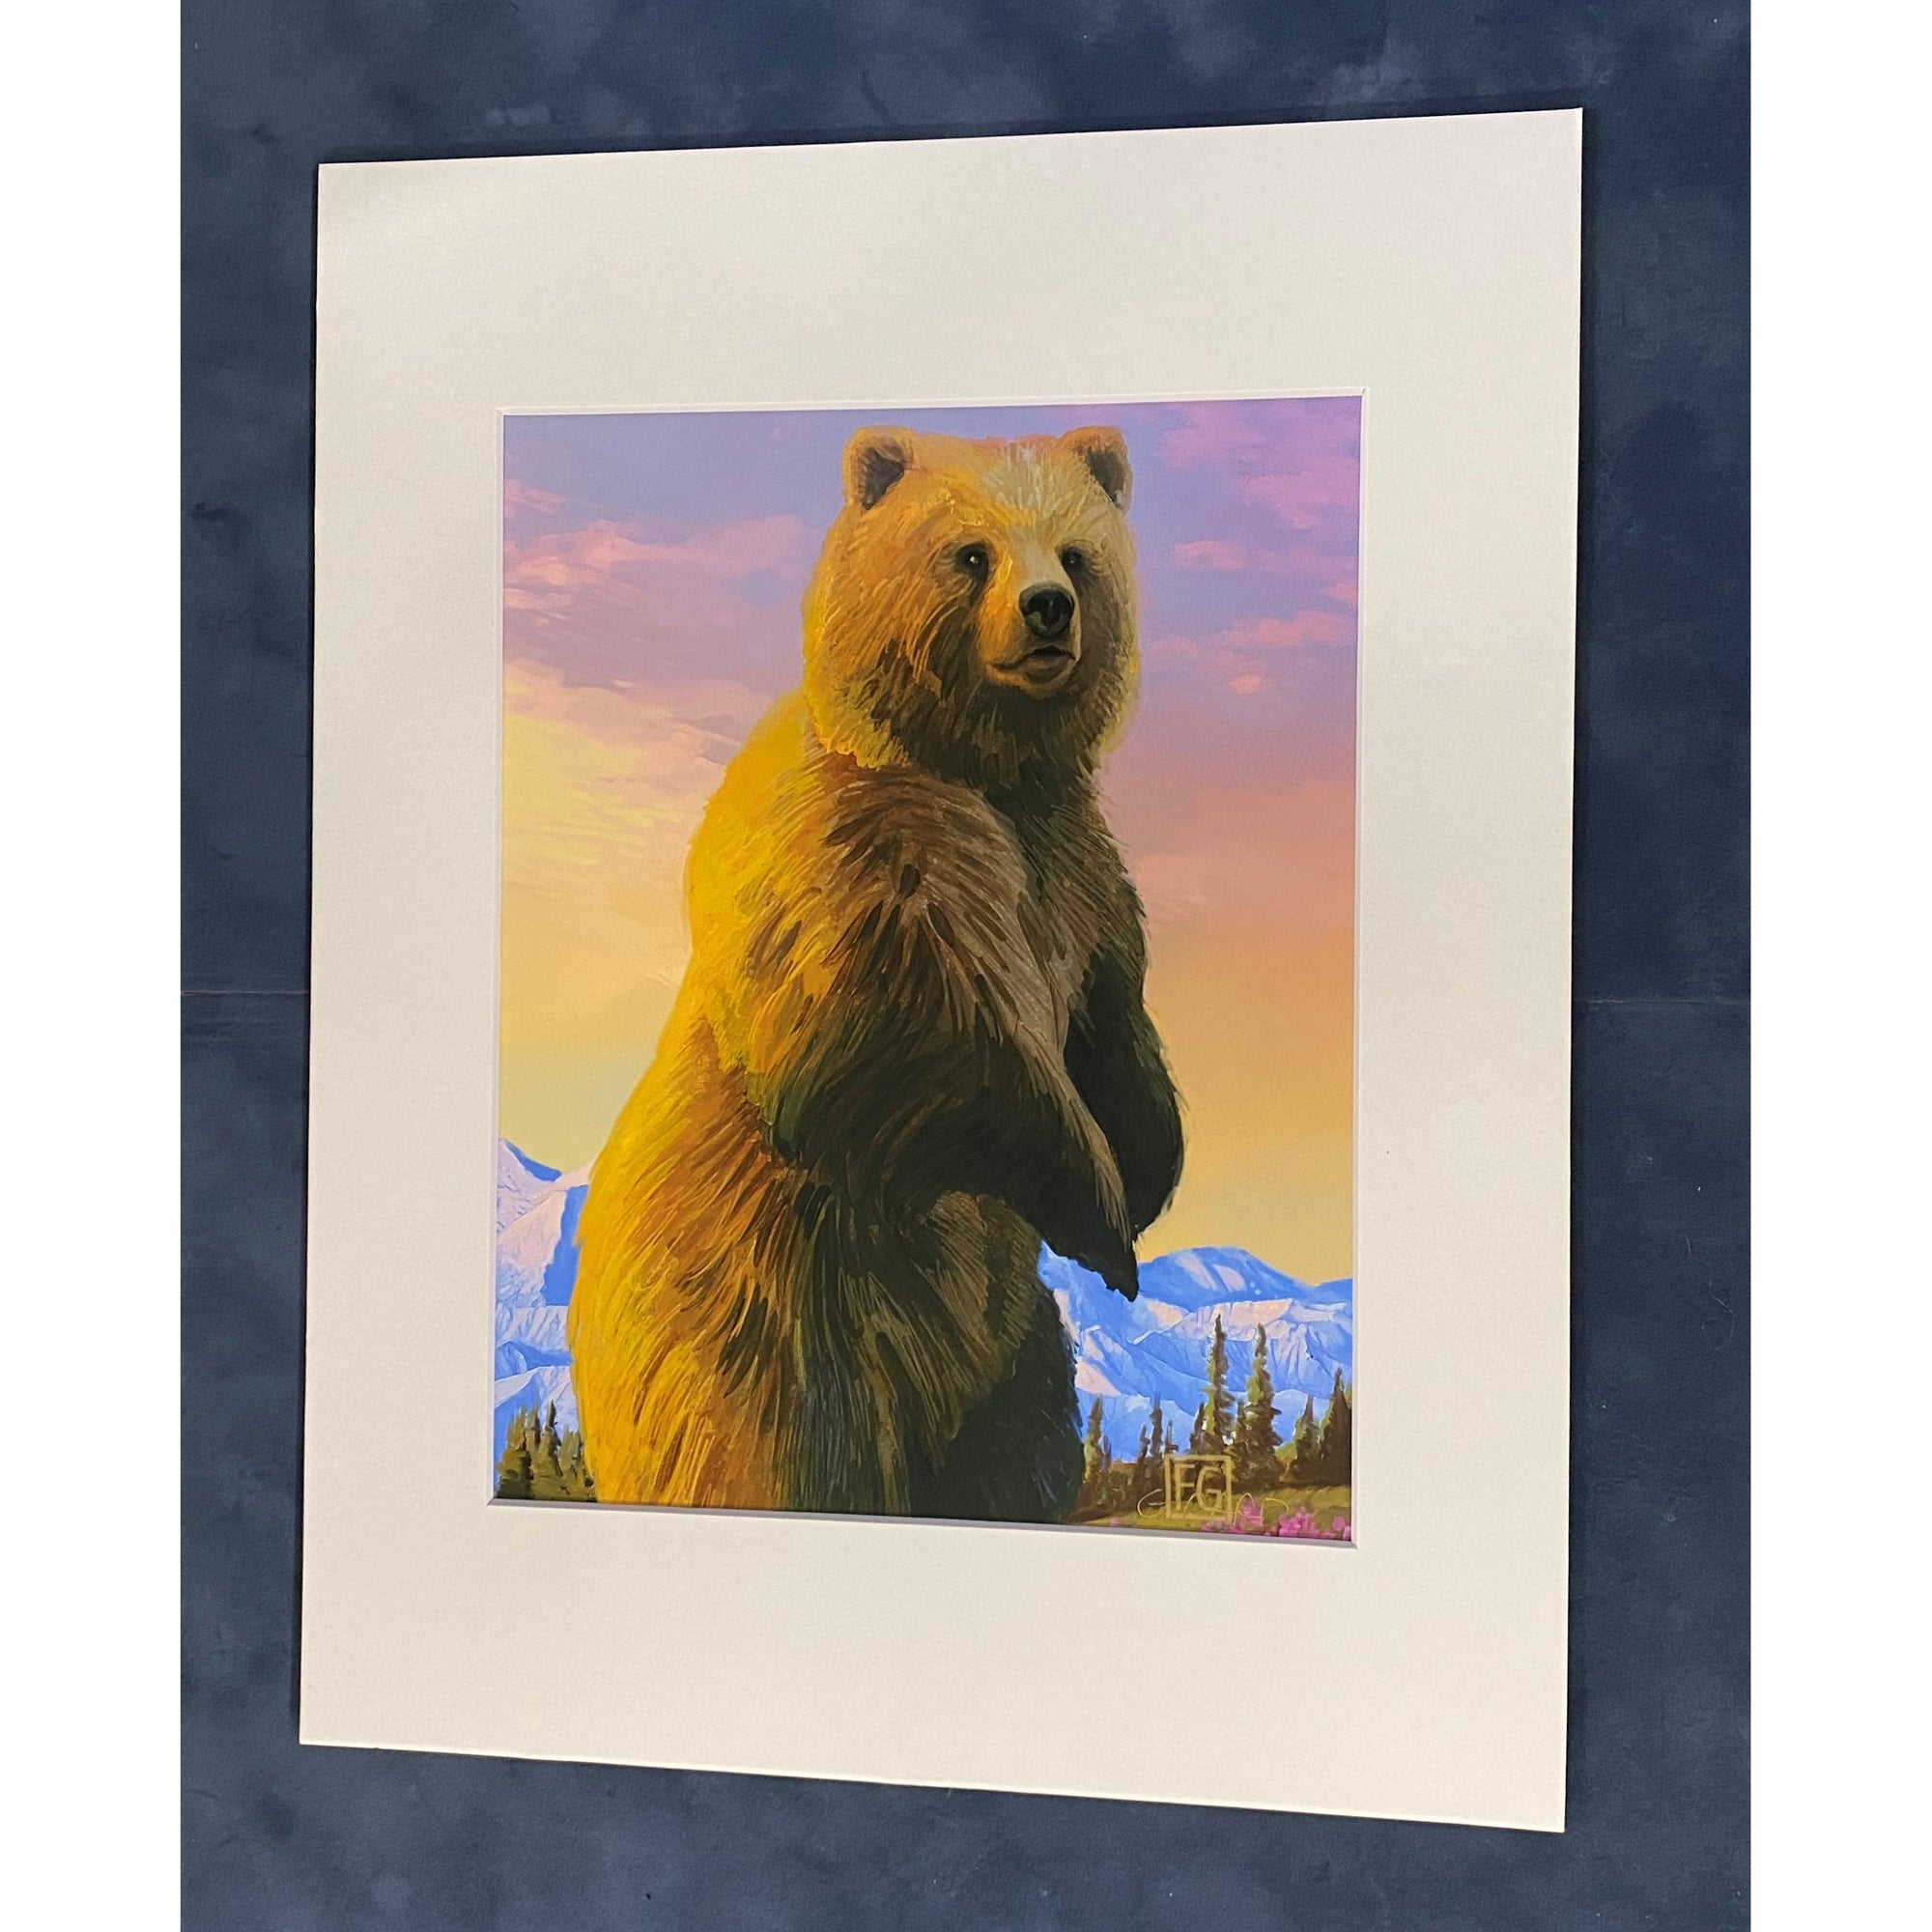 Brown Bear - Giclée Print by artist Francois Girard